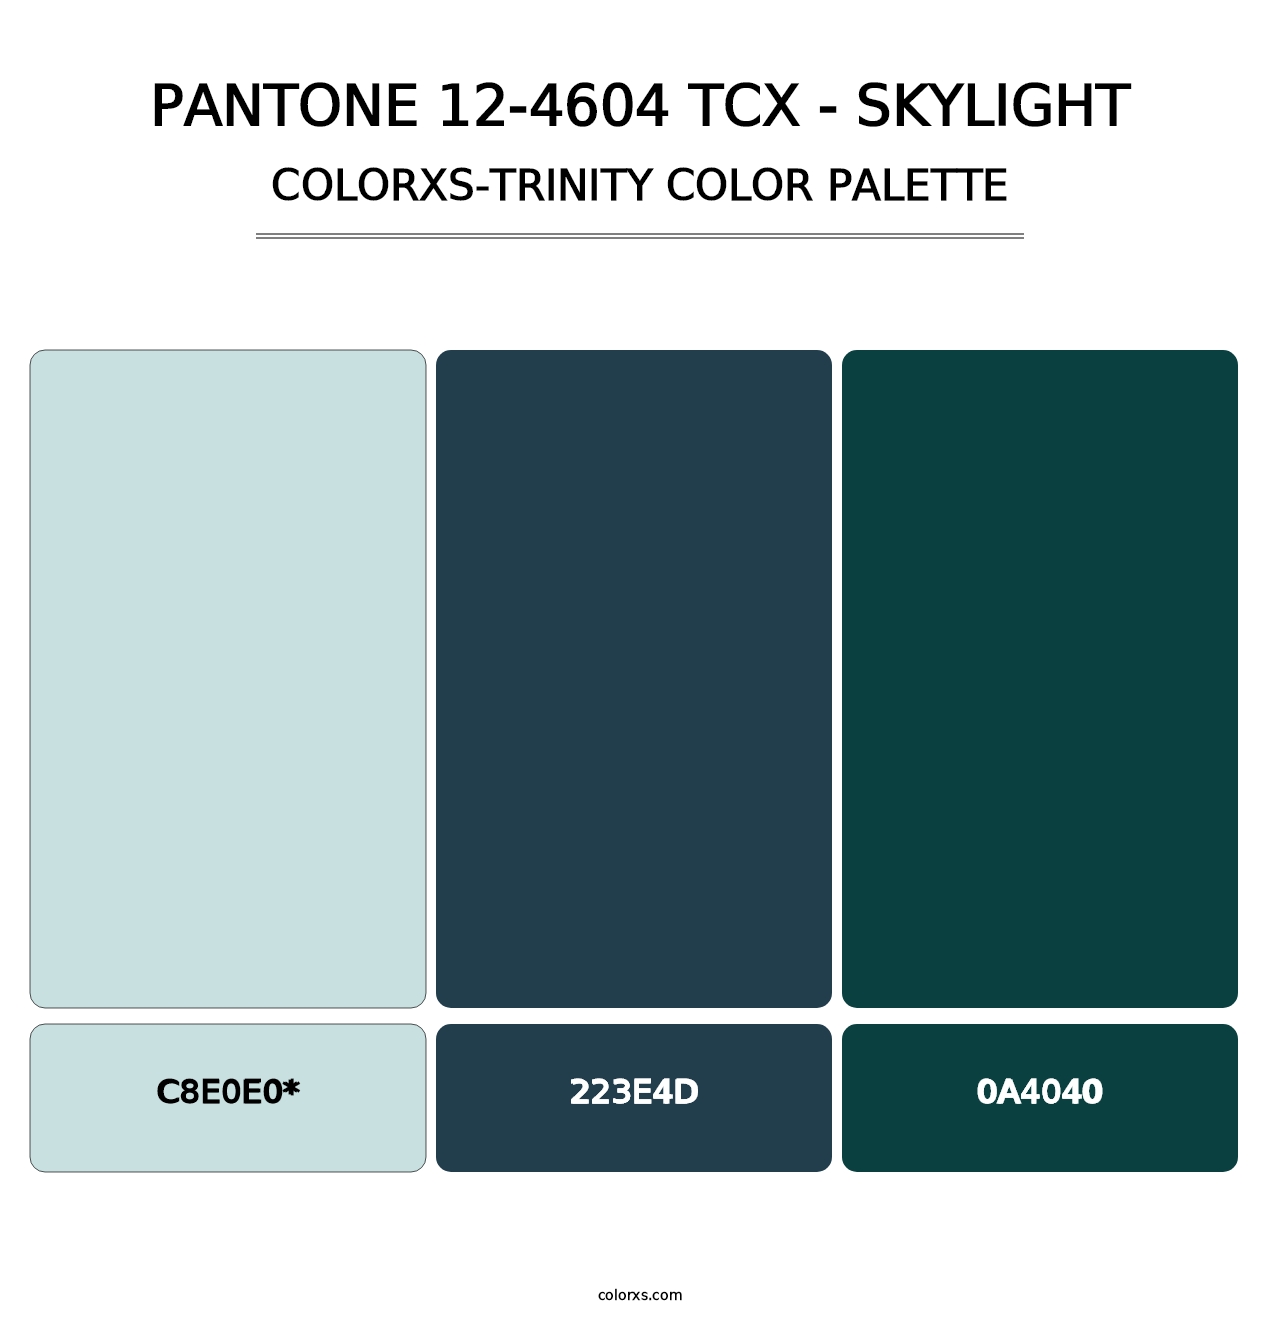 PANTONE 12-4604 TCX - Skylight - Colorxs Trinity Palette